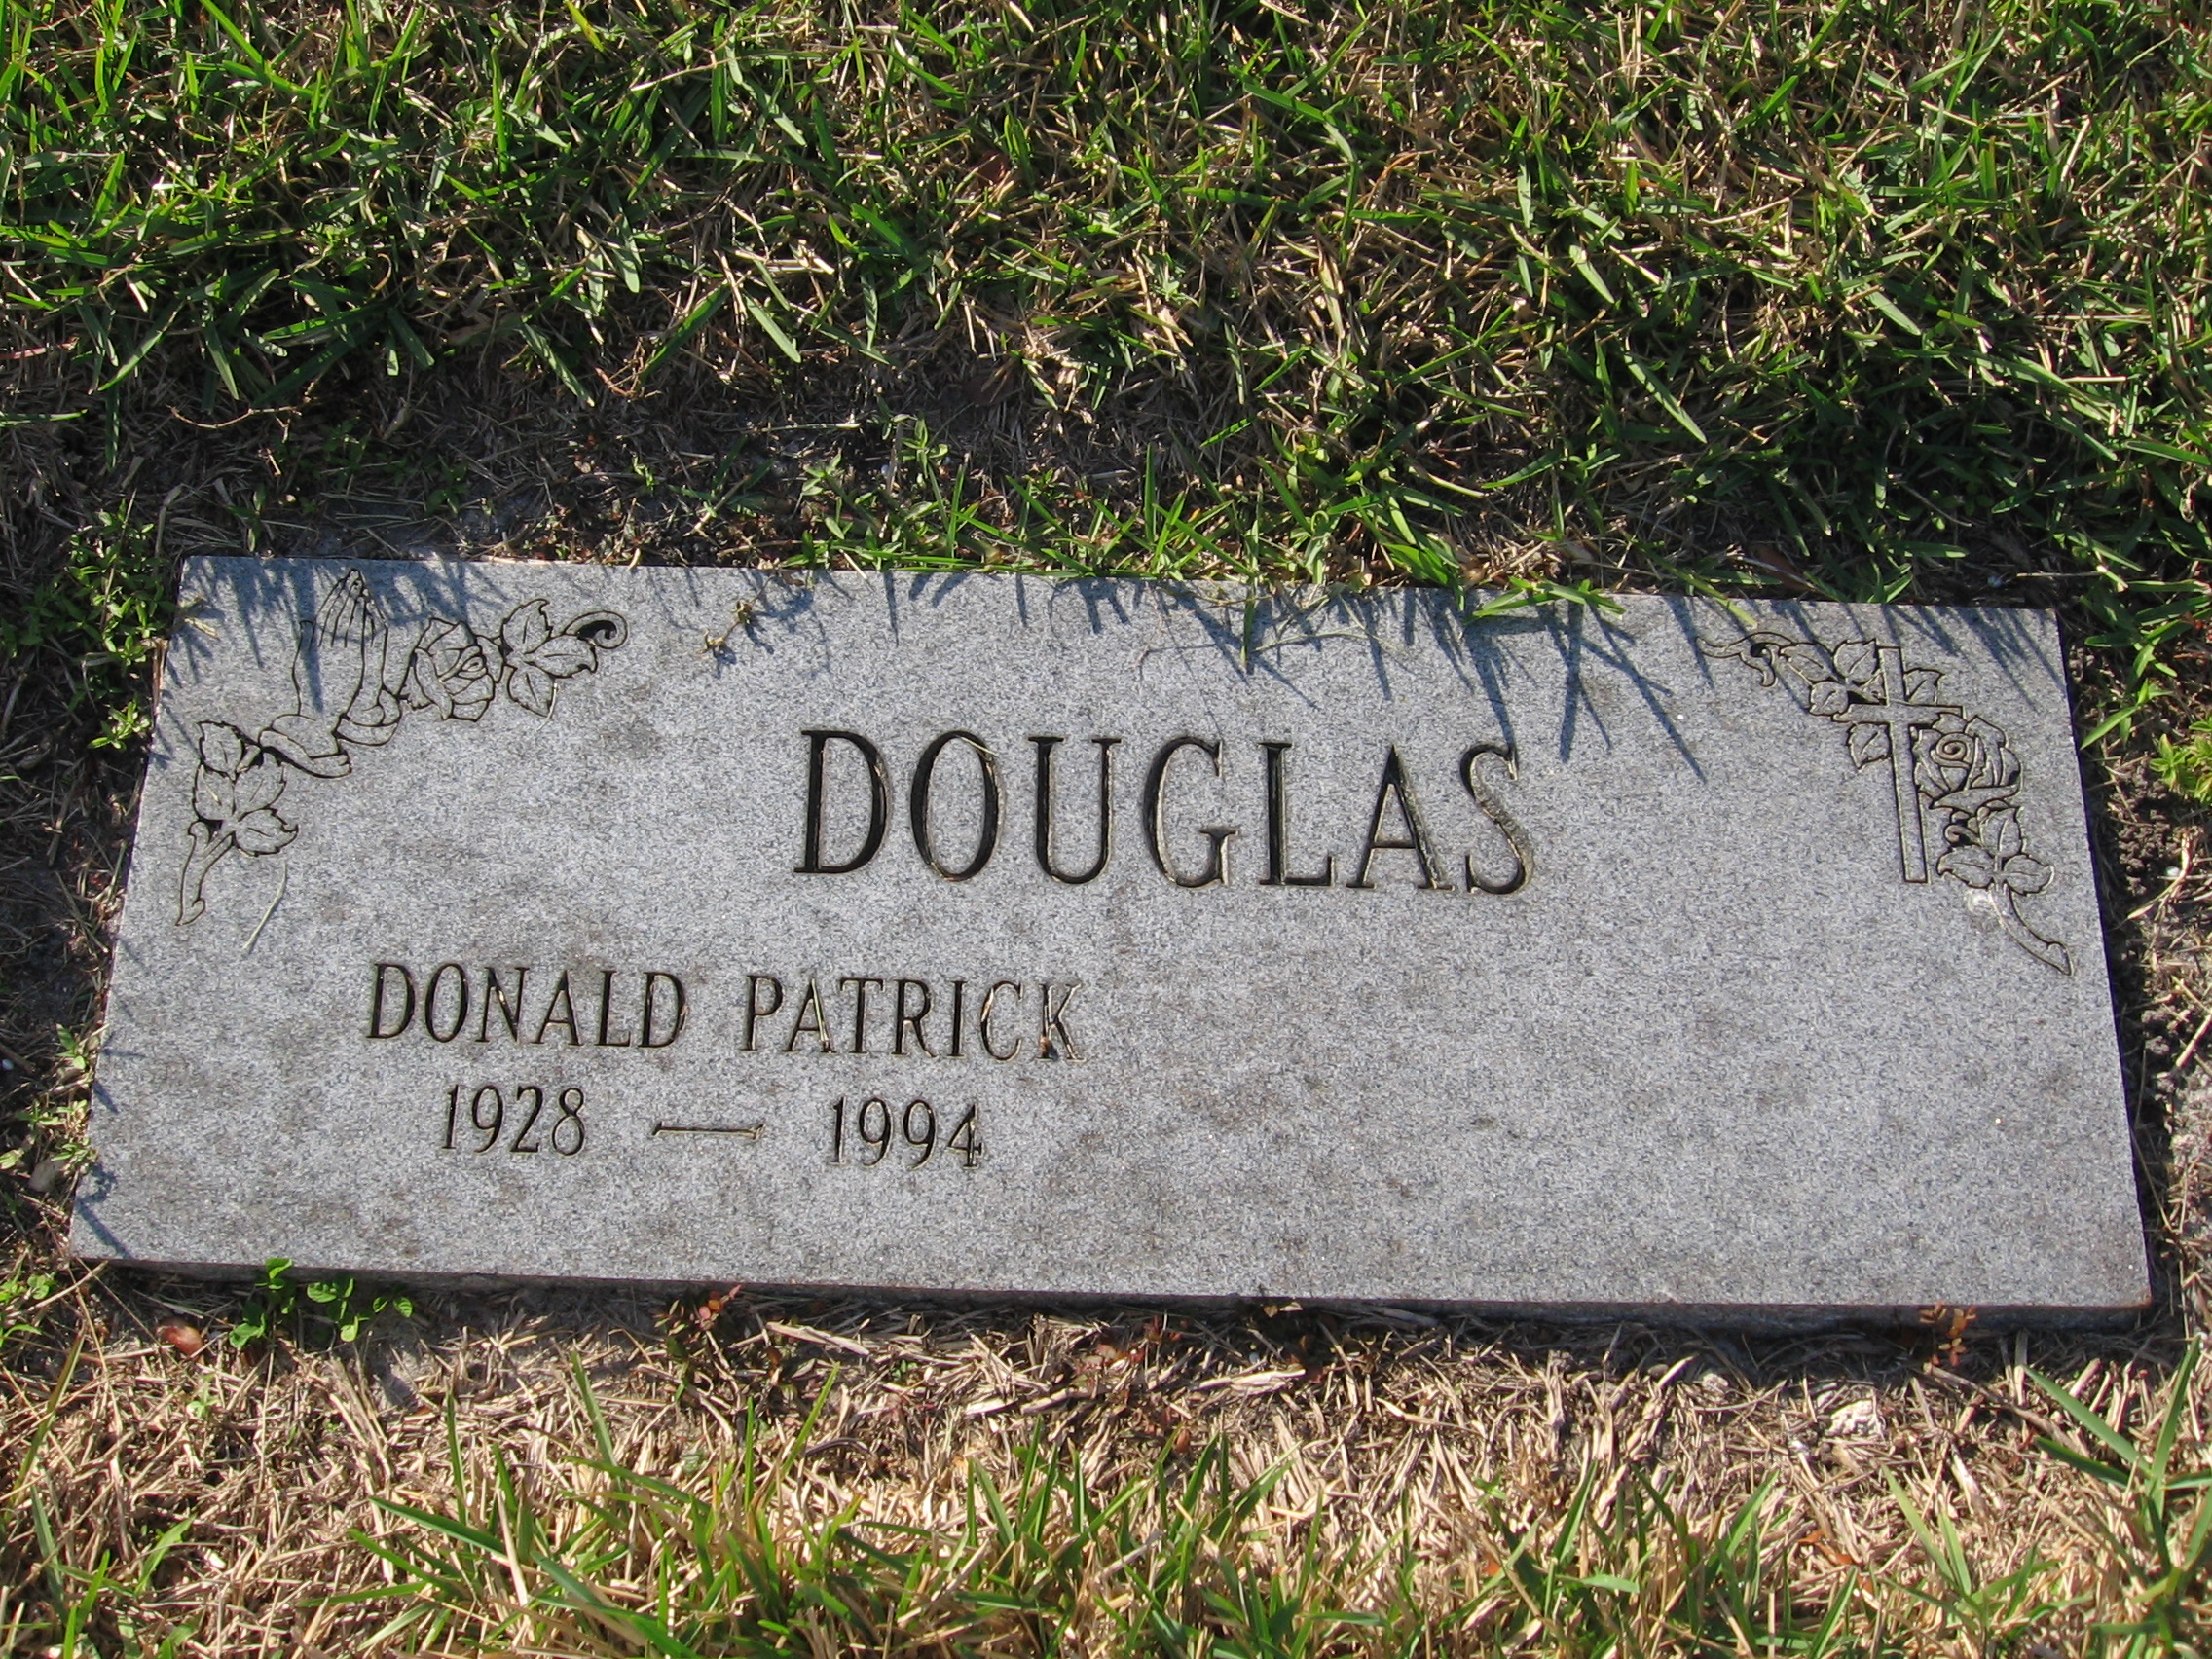 Donald Patrick Douglas